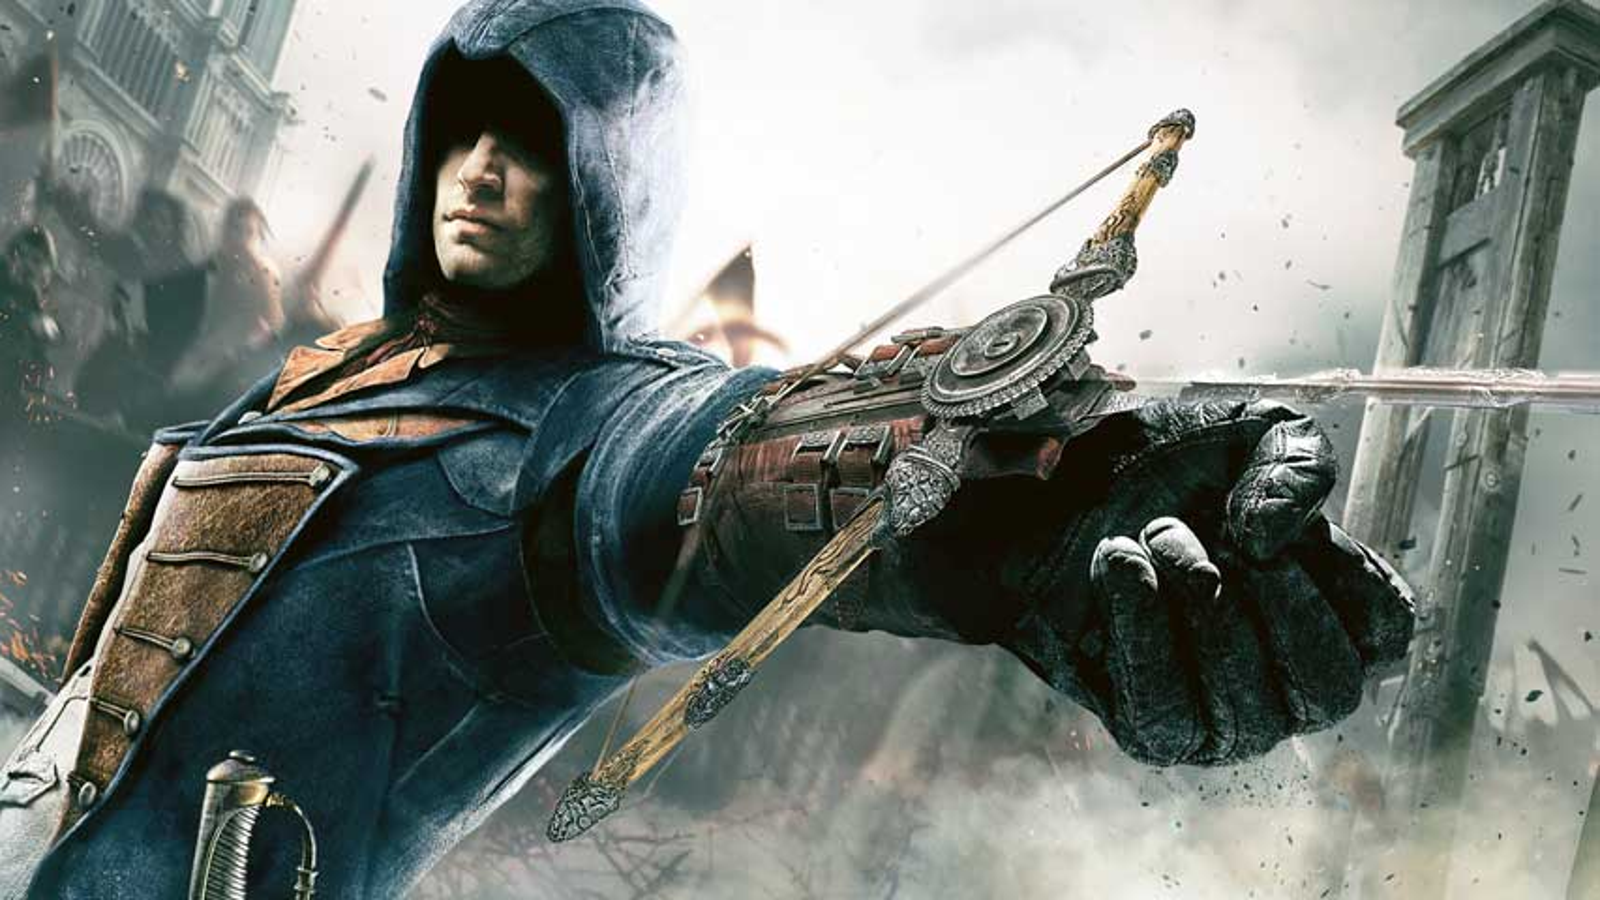 Assassin's Creed Unity - Metacritic